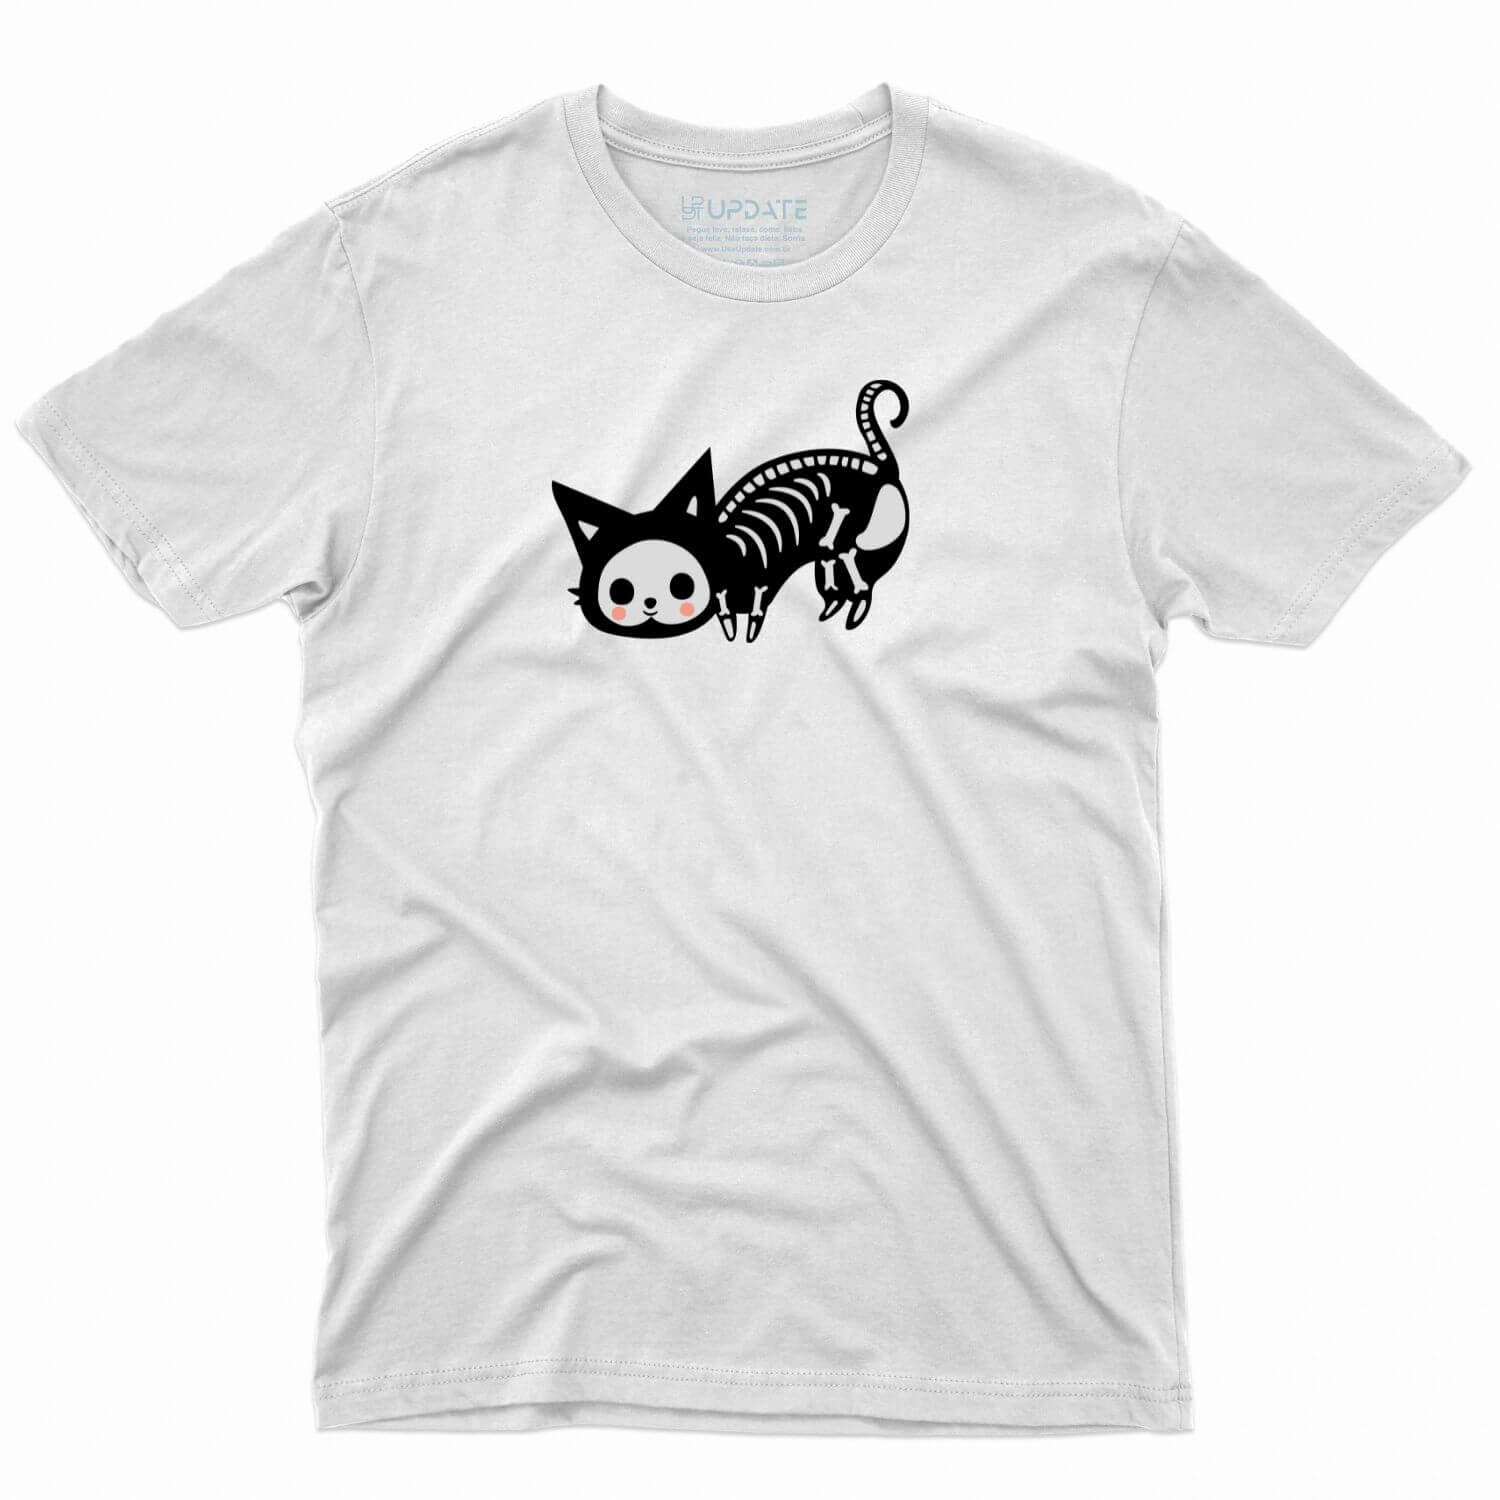 Camiseta Gato de Schrödinger – Põe uma blusa